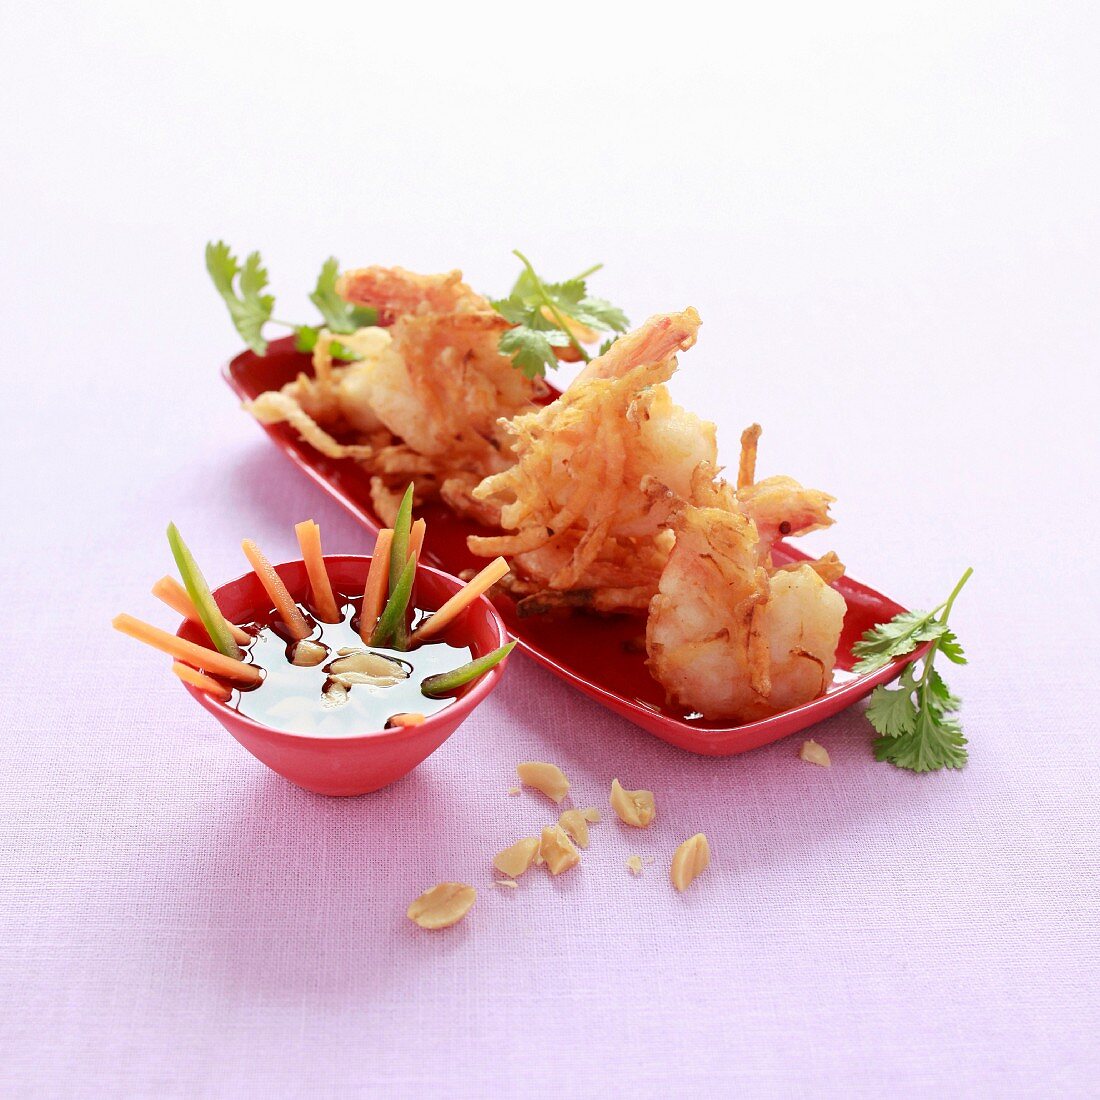 Shrimps in peanut and onion crust, vegetable sticks with vinaigrette